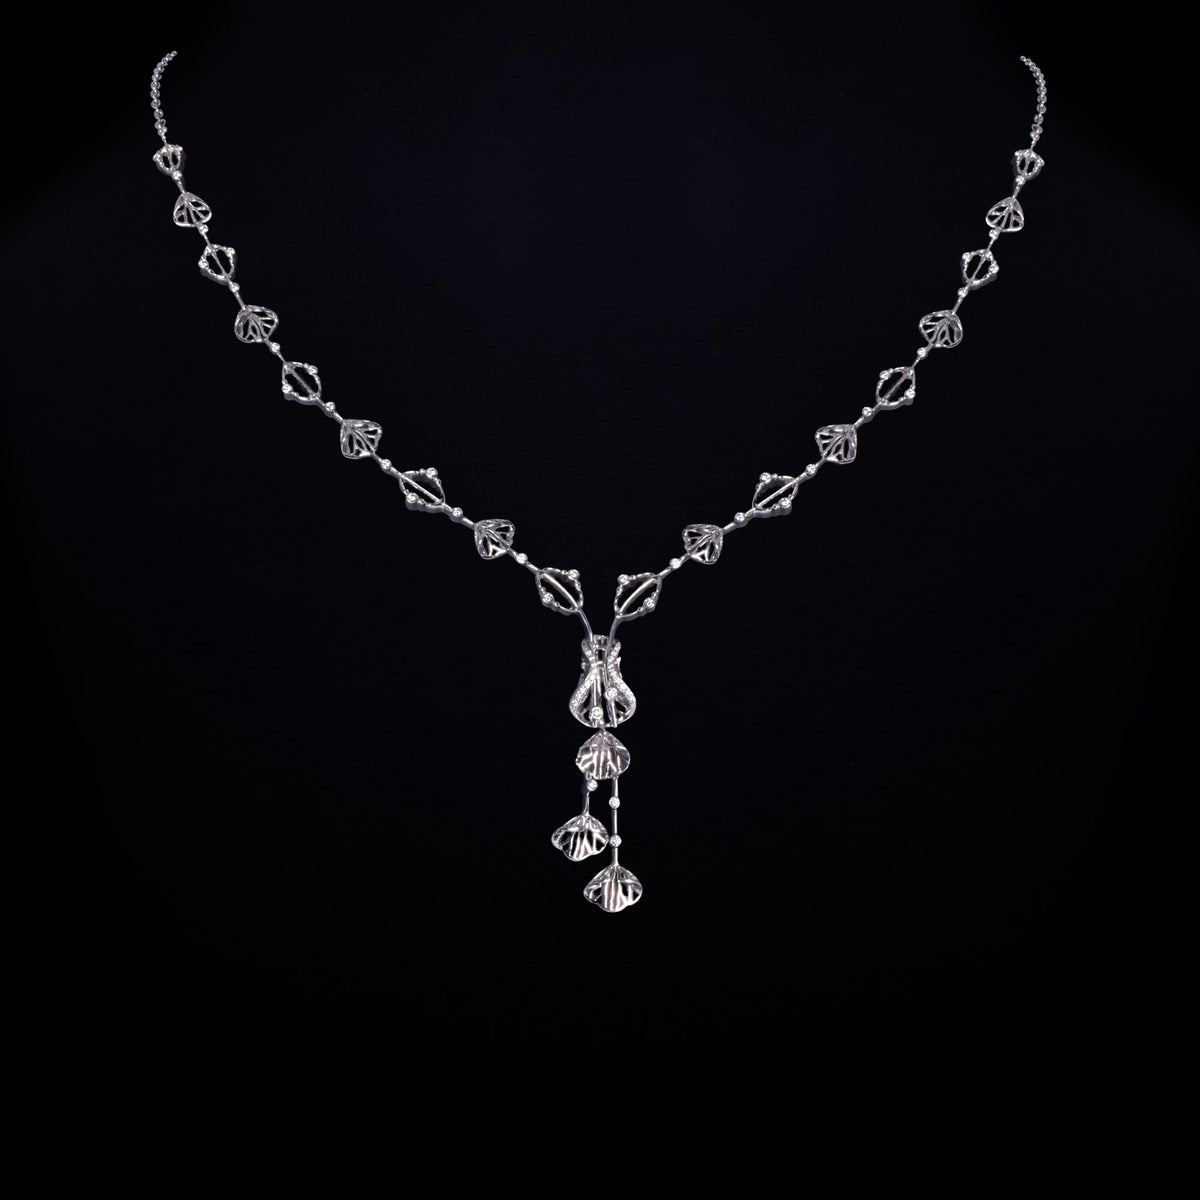 Southwestern Rhodium-Platinum Turquoise Necklace Earrings Jewellery Set:  'Rio Grande' Liquid Rhodium-Platinum Turquoise Necklace & Earrings Set